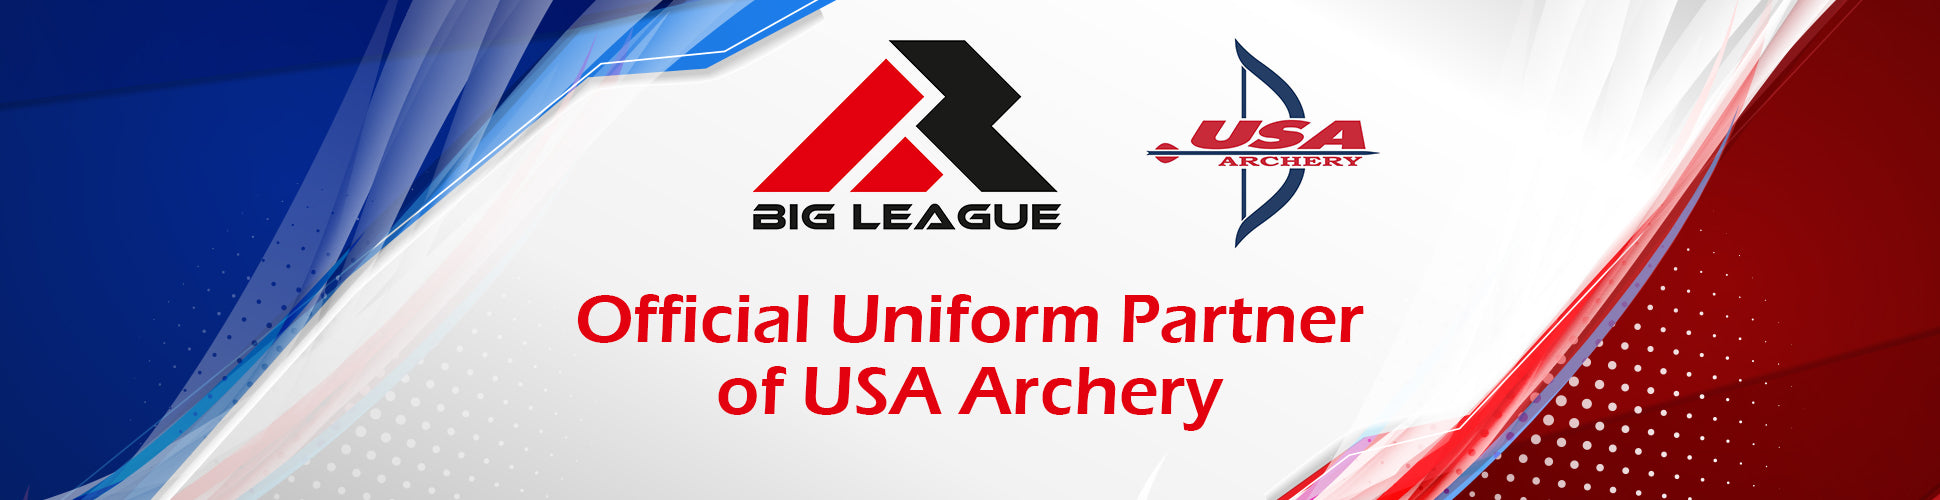 Offical Uniform Partner of USA Archery